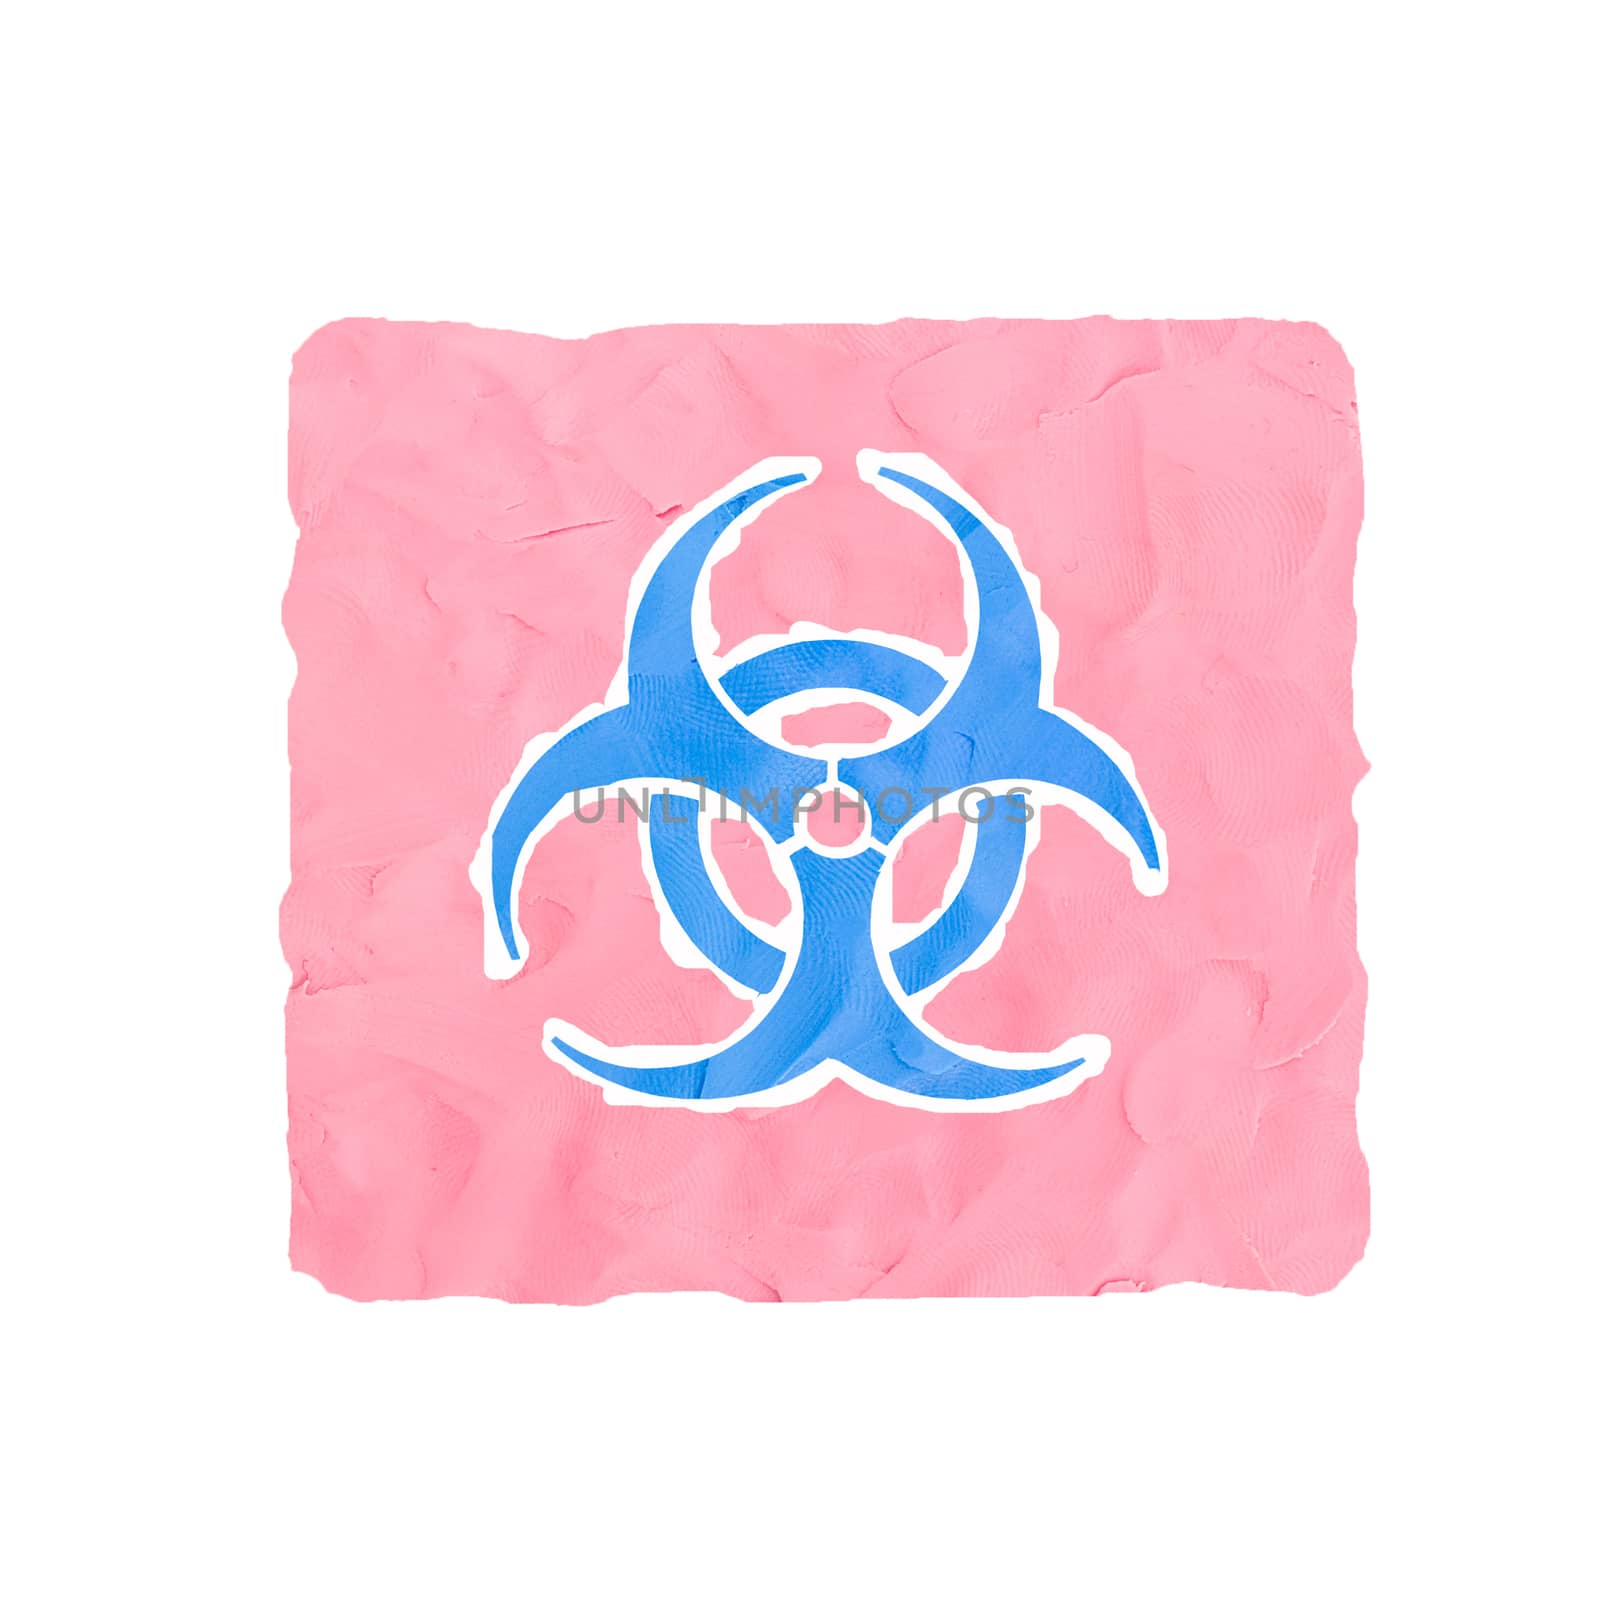 biohazard icon handmade isolated on white background